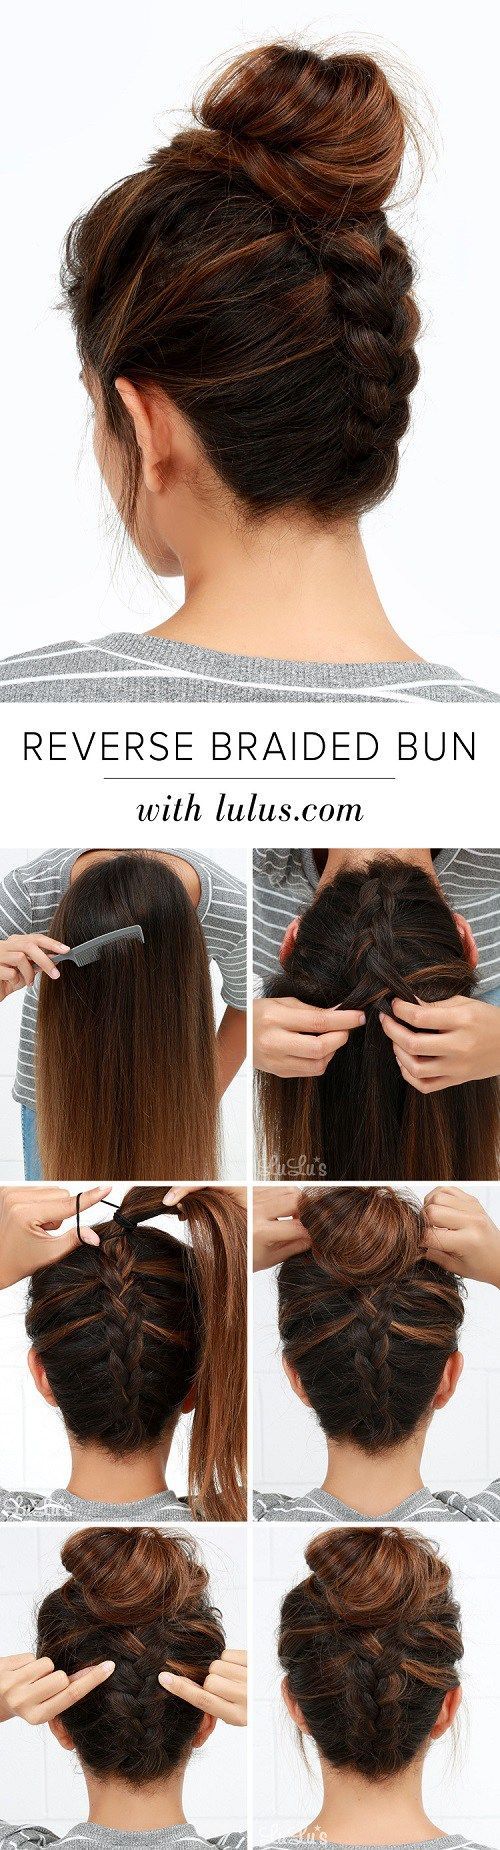 reversed braided bun over